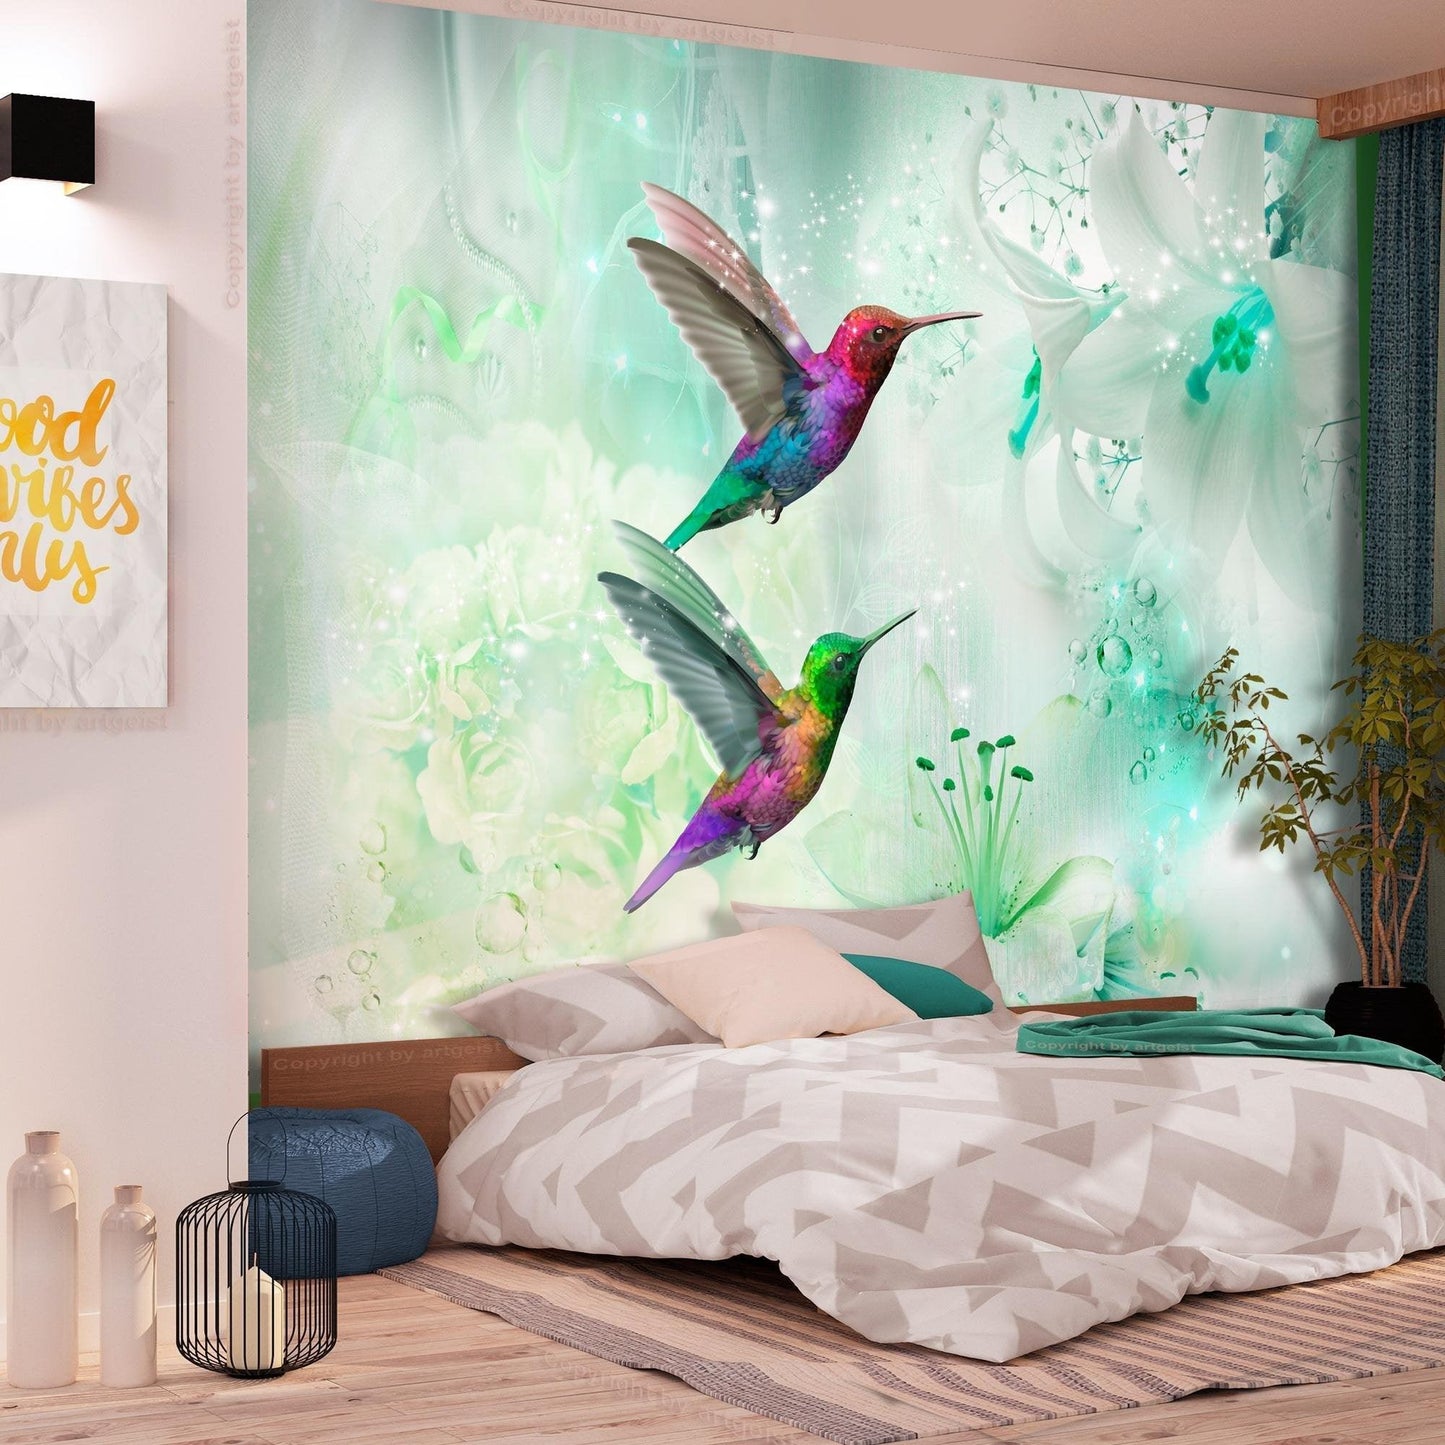 Peel and stick wall mural - Colourful Hummingbirds (Green) - www.trendingbestsellers.com